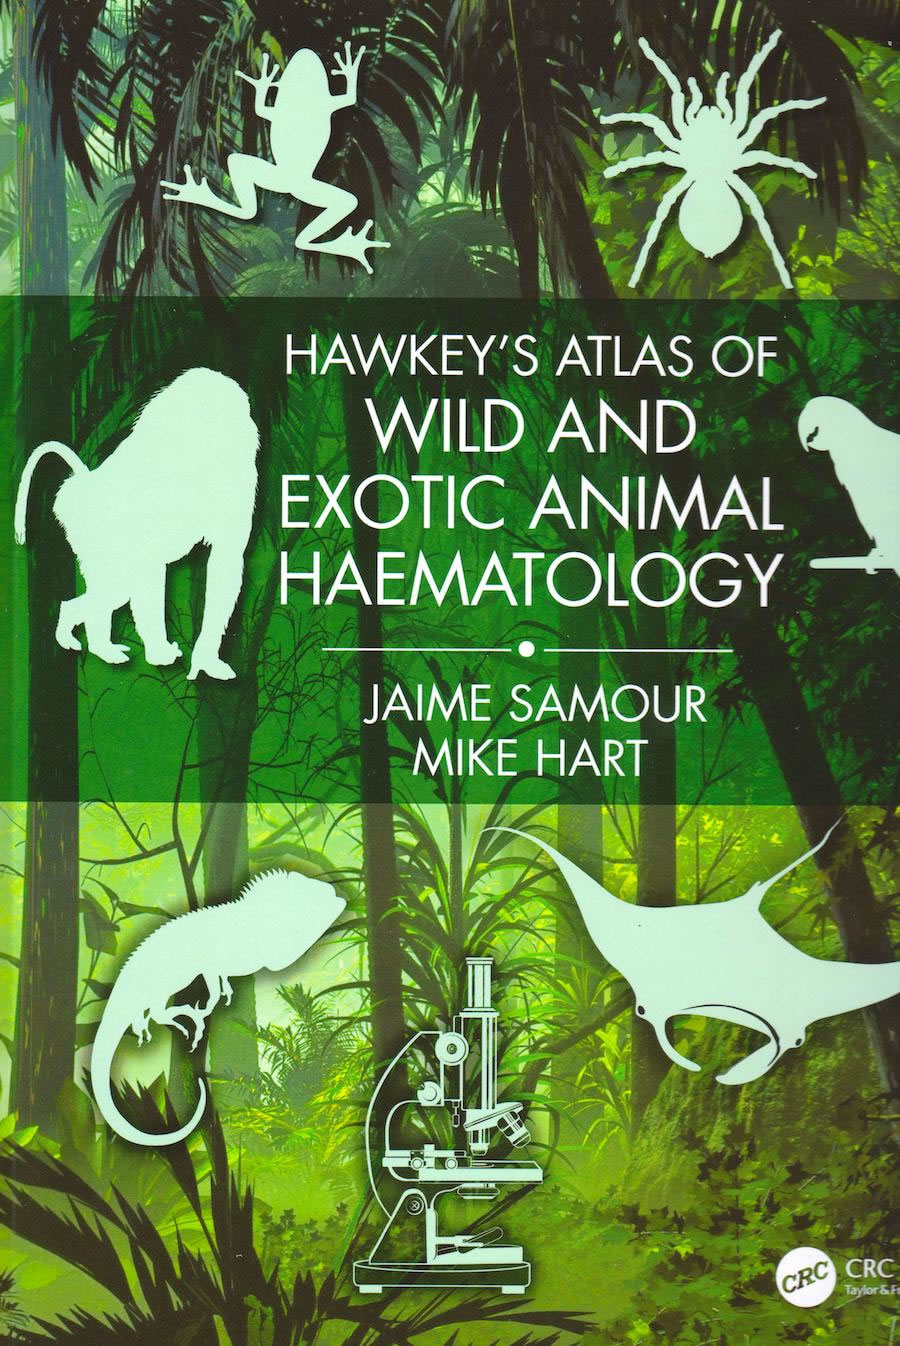 Hawkey's atlas of wild and exotic animal haematology